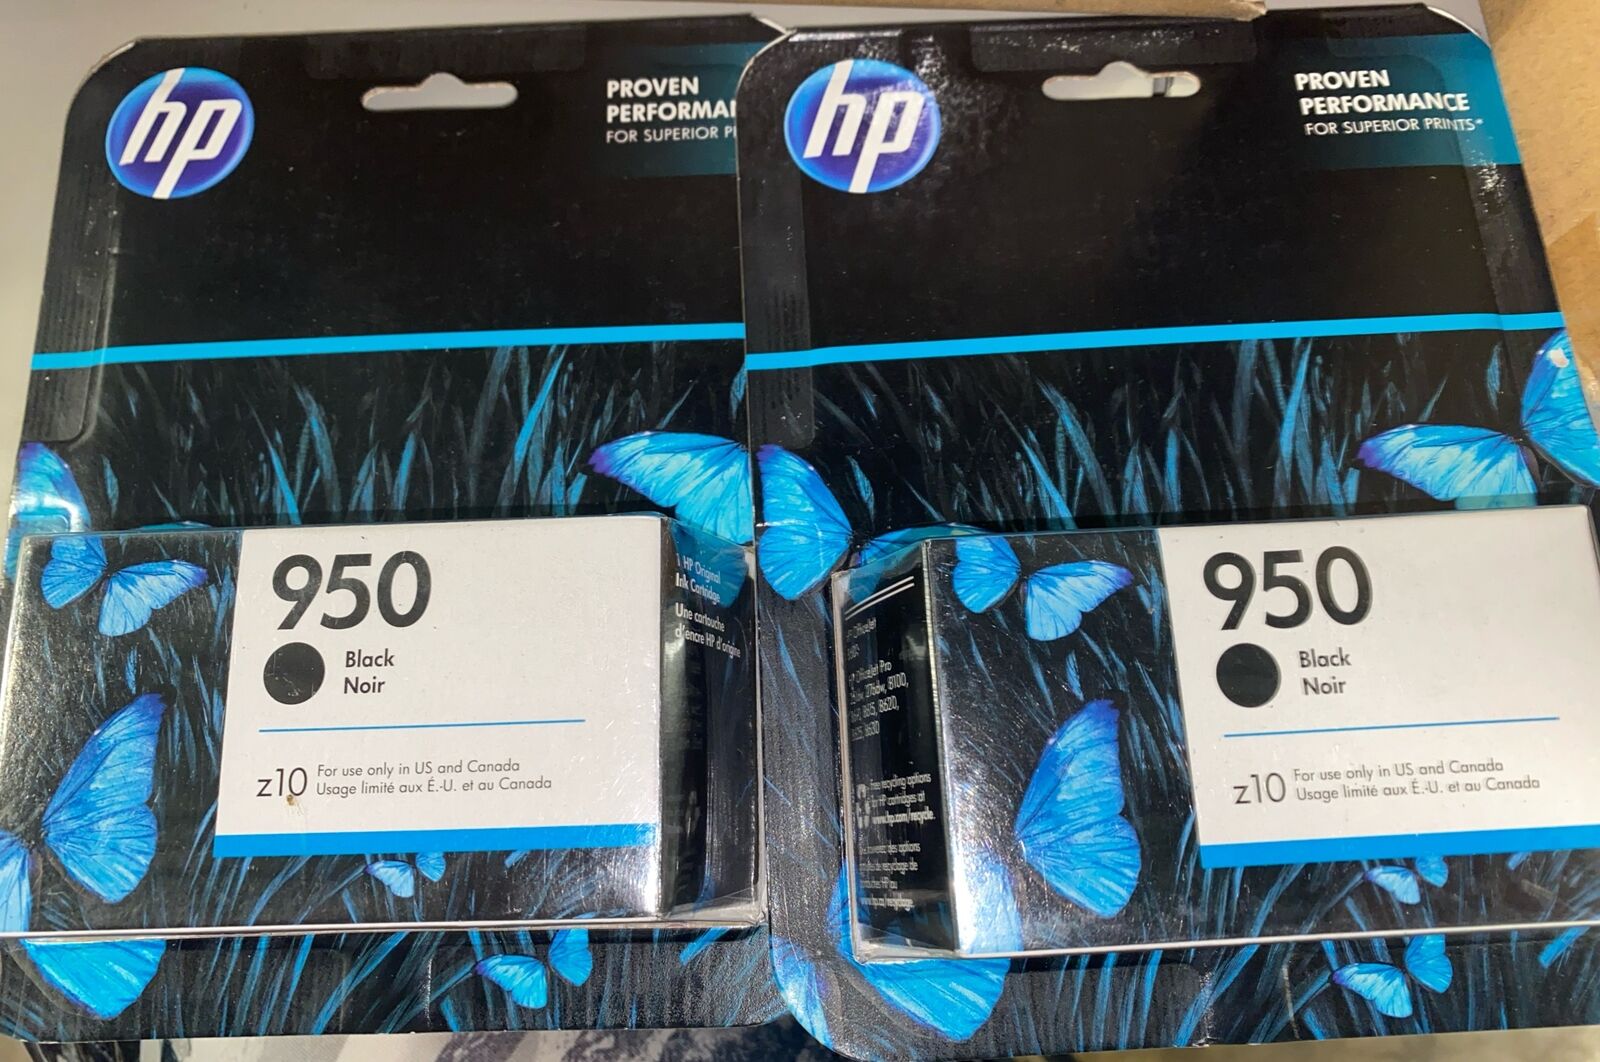 (LOT OF 2) HP 950 Black Officejet Ink Cartridge Exp: Dec 2018 - 